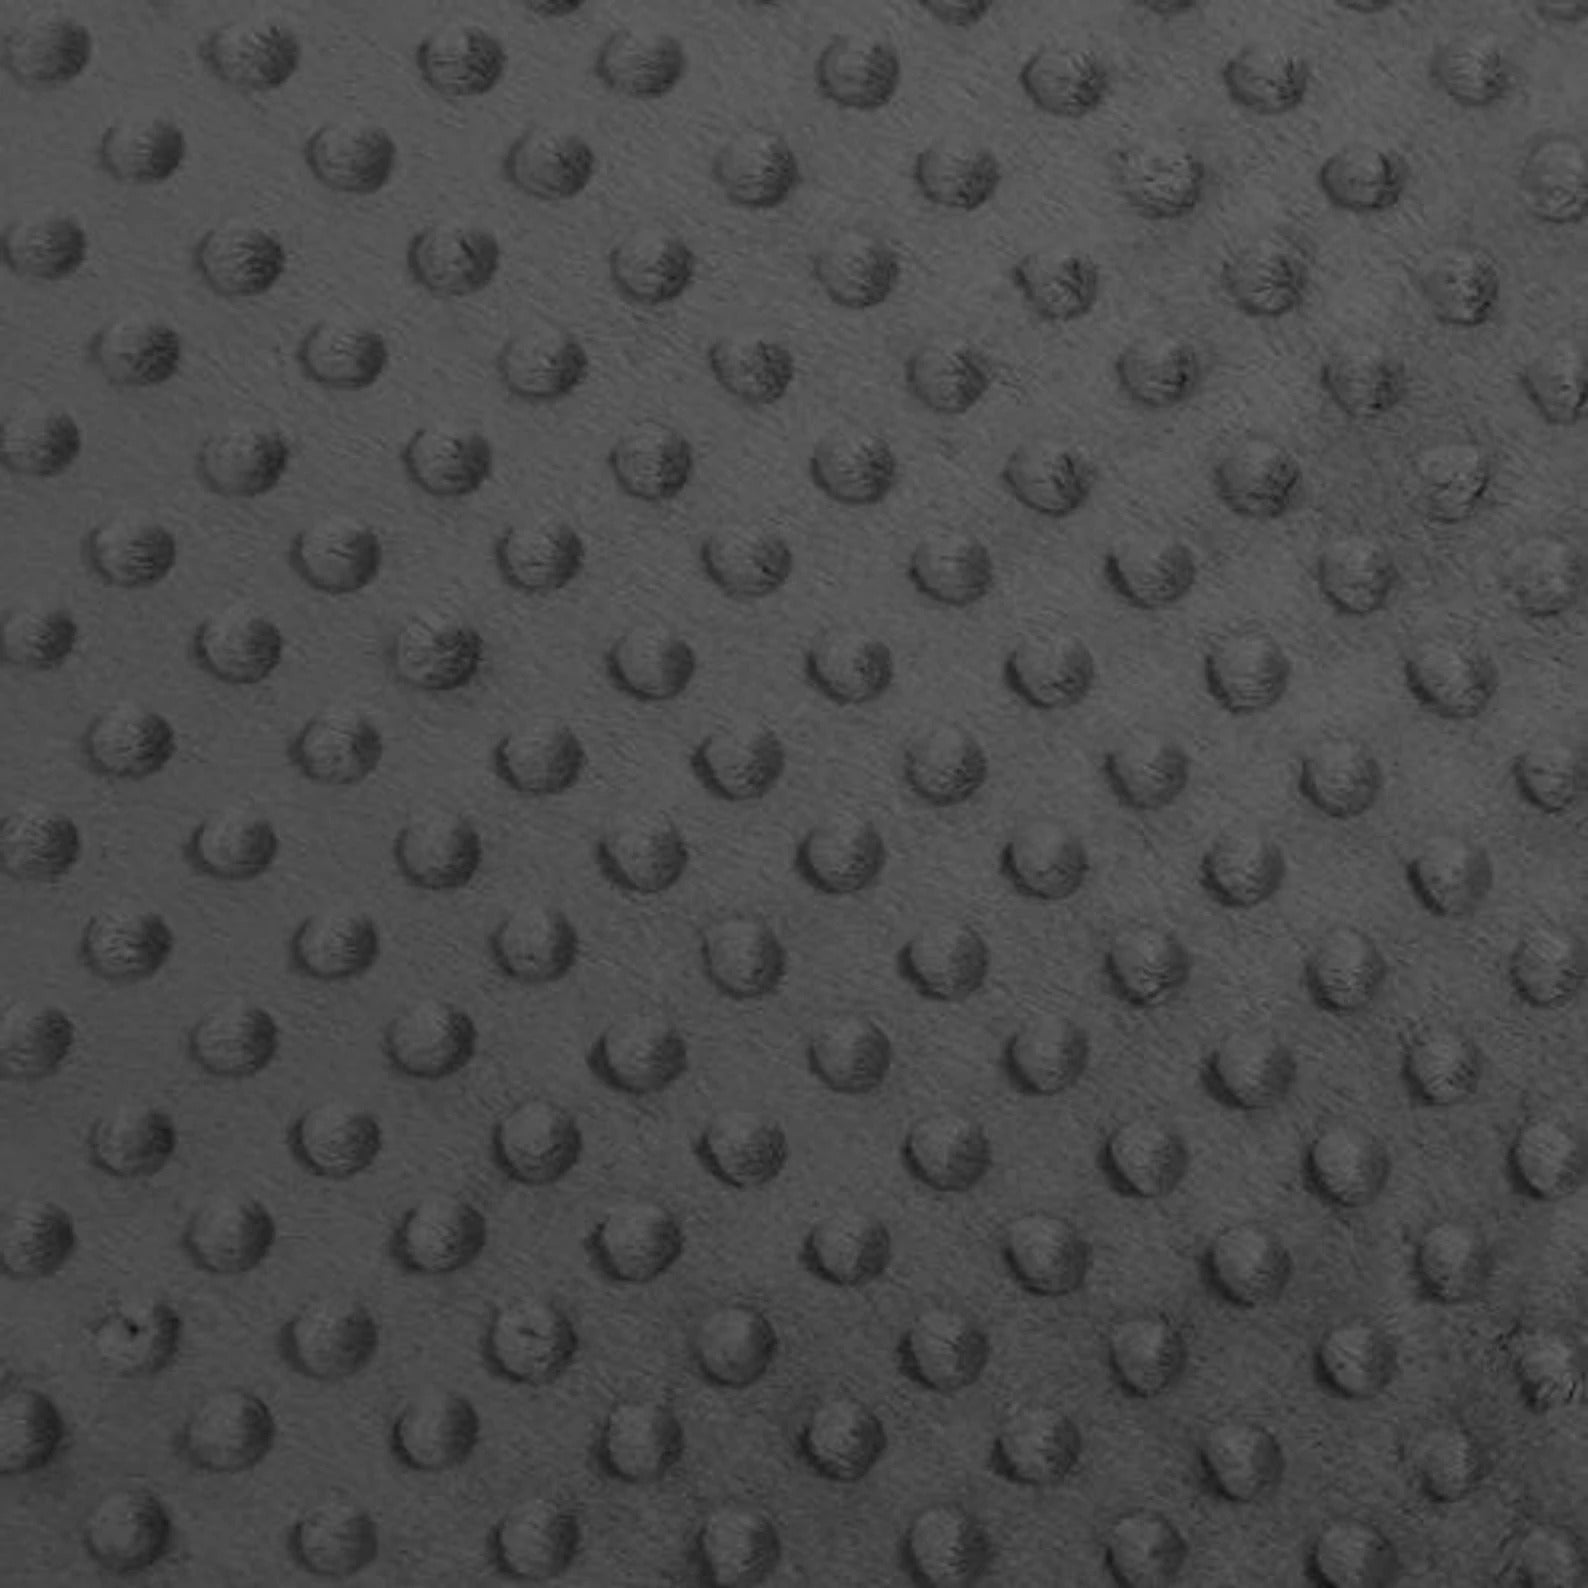 Bubble Polka Dot Minky Fabric By The Roll (20 Yards) Wholesale FabricMinkyICEFABRICICE FABRICSCharcoal GrayBy The Roll (60" Wide)Bubble Polka Dot Minky Fabric By The Roll (20 Yards) Wholesale Fabric ICEFABRIC Charcoal Gray